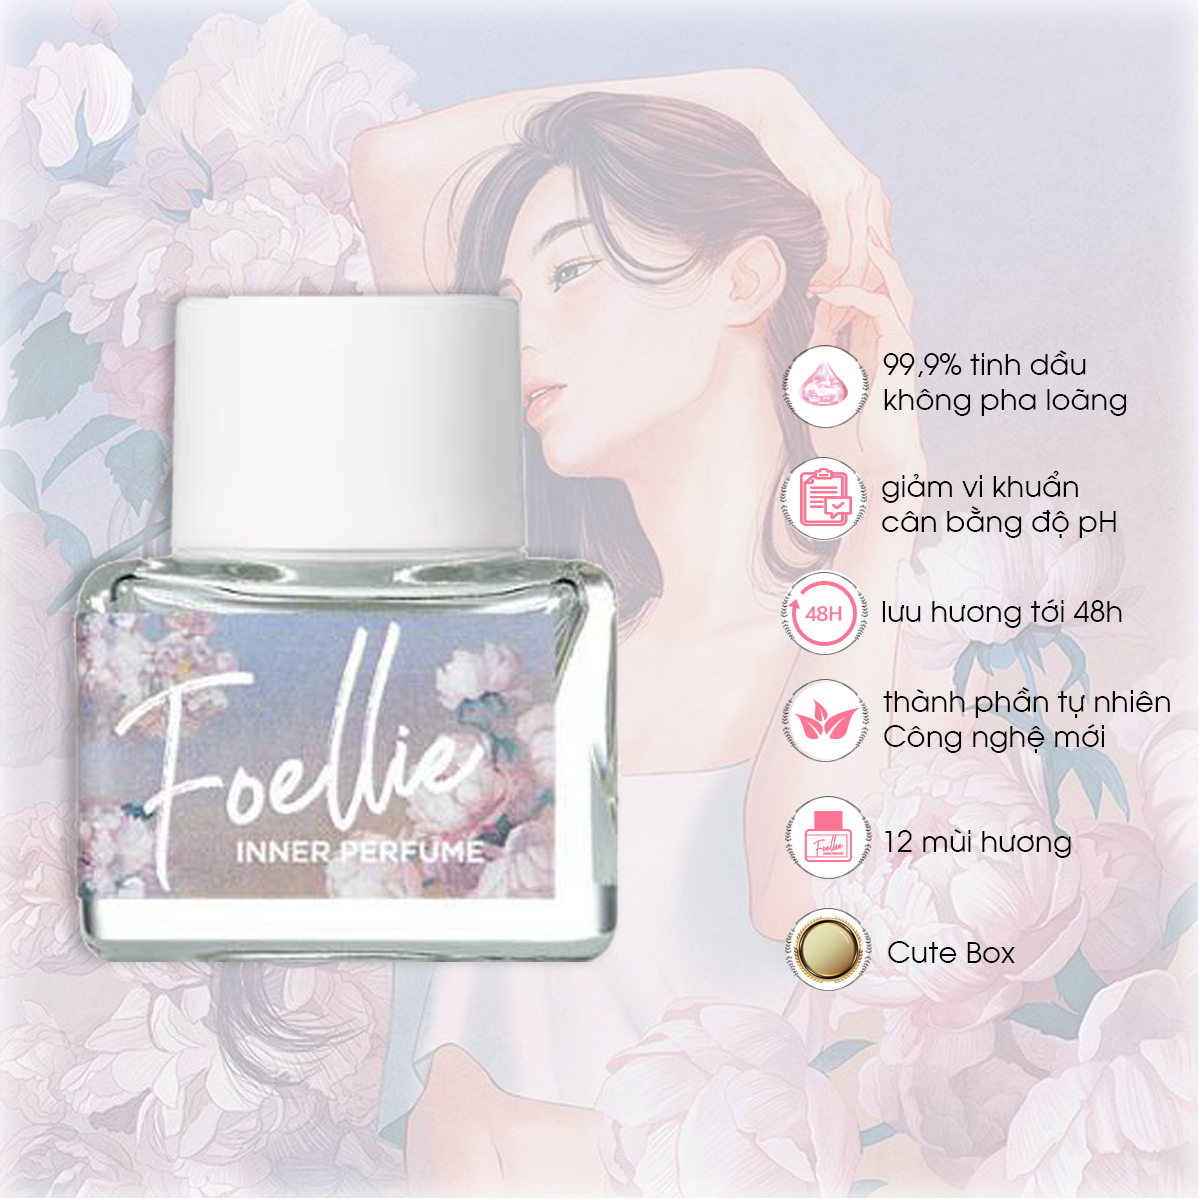 Nước hoa vùng kín Foellie Eau De Ciel x Zipcy Inner Perfume 5ml